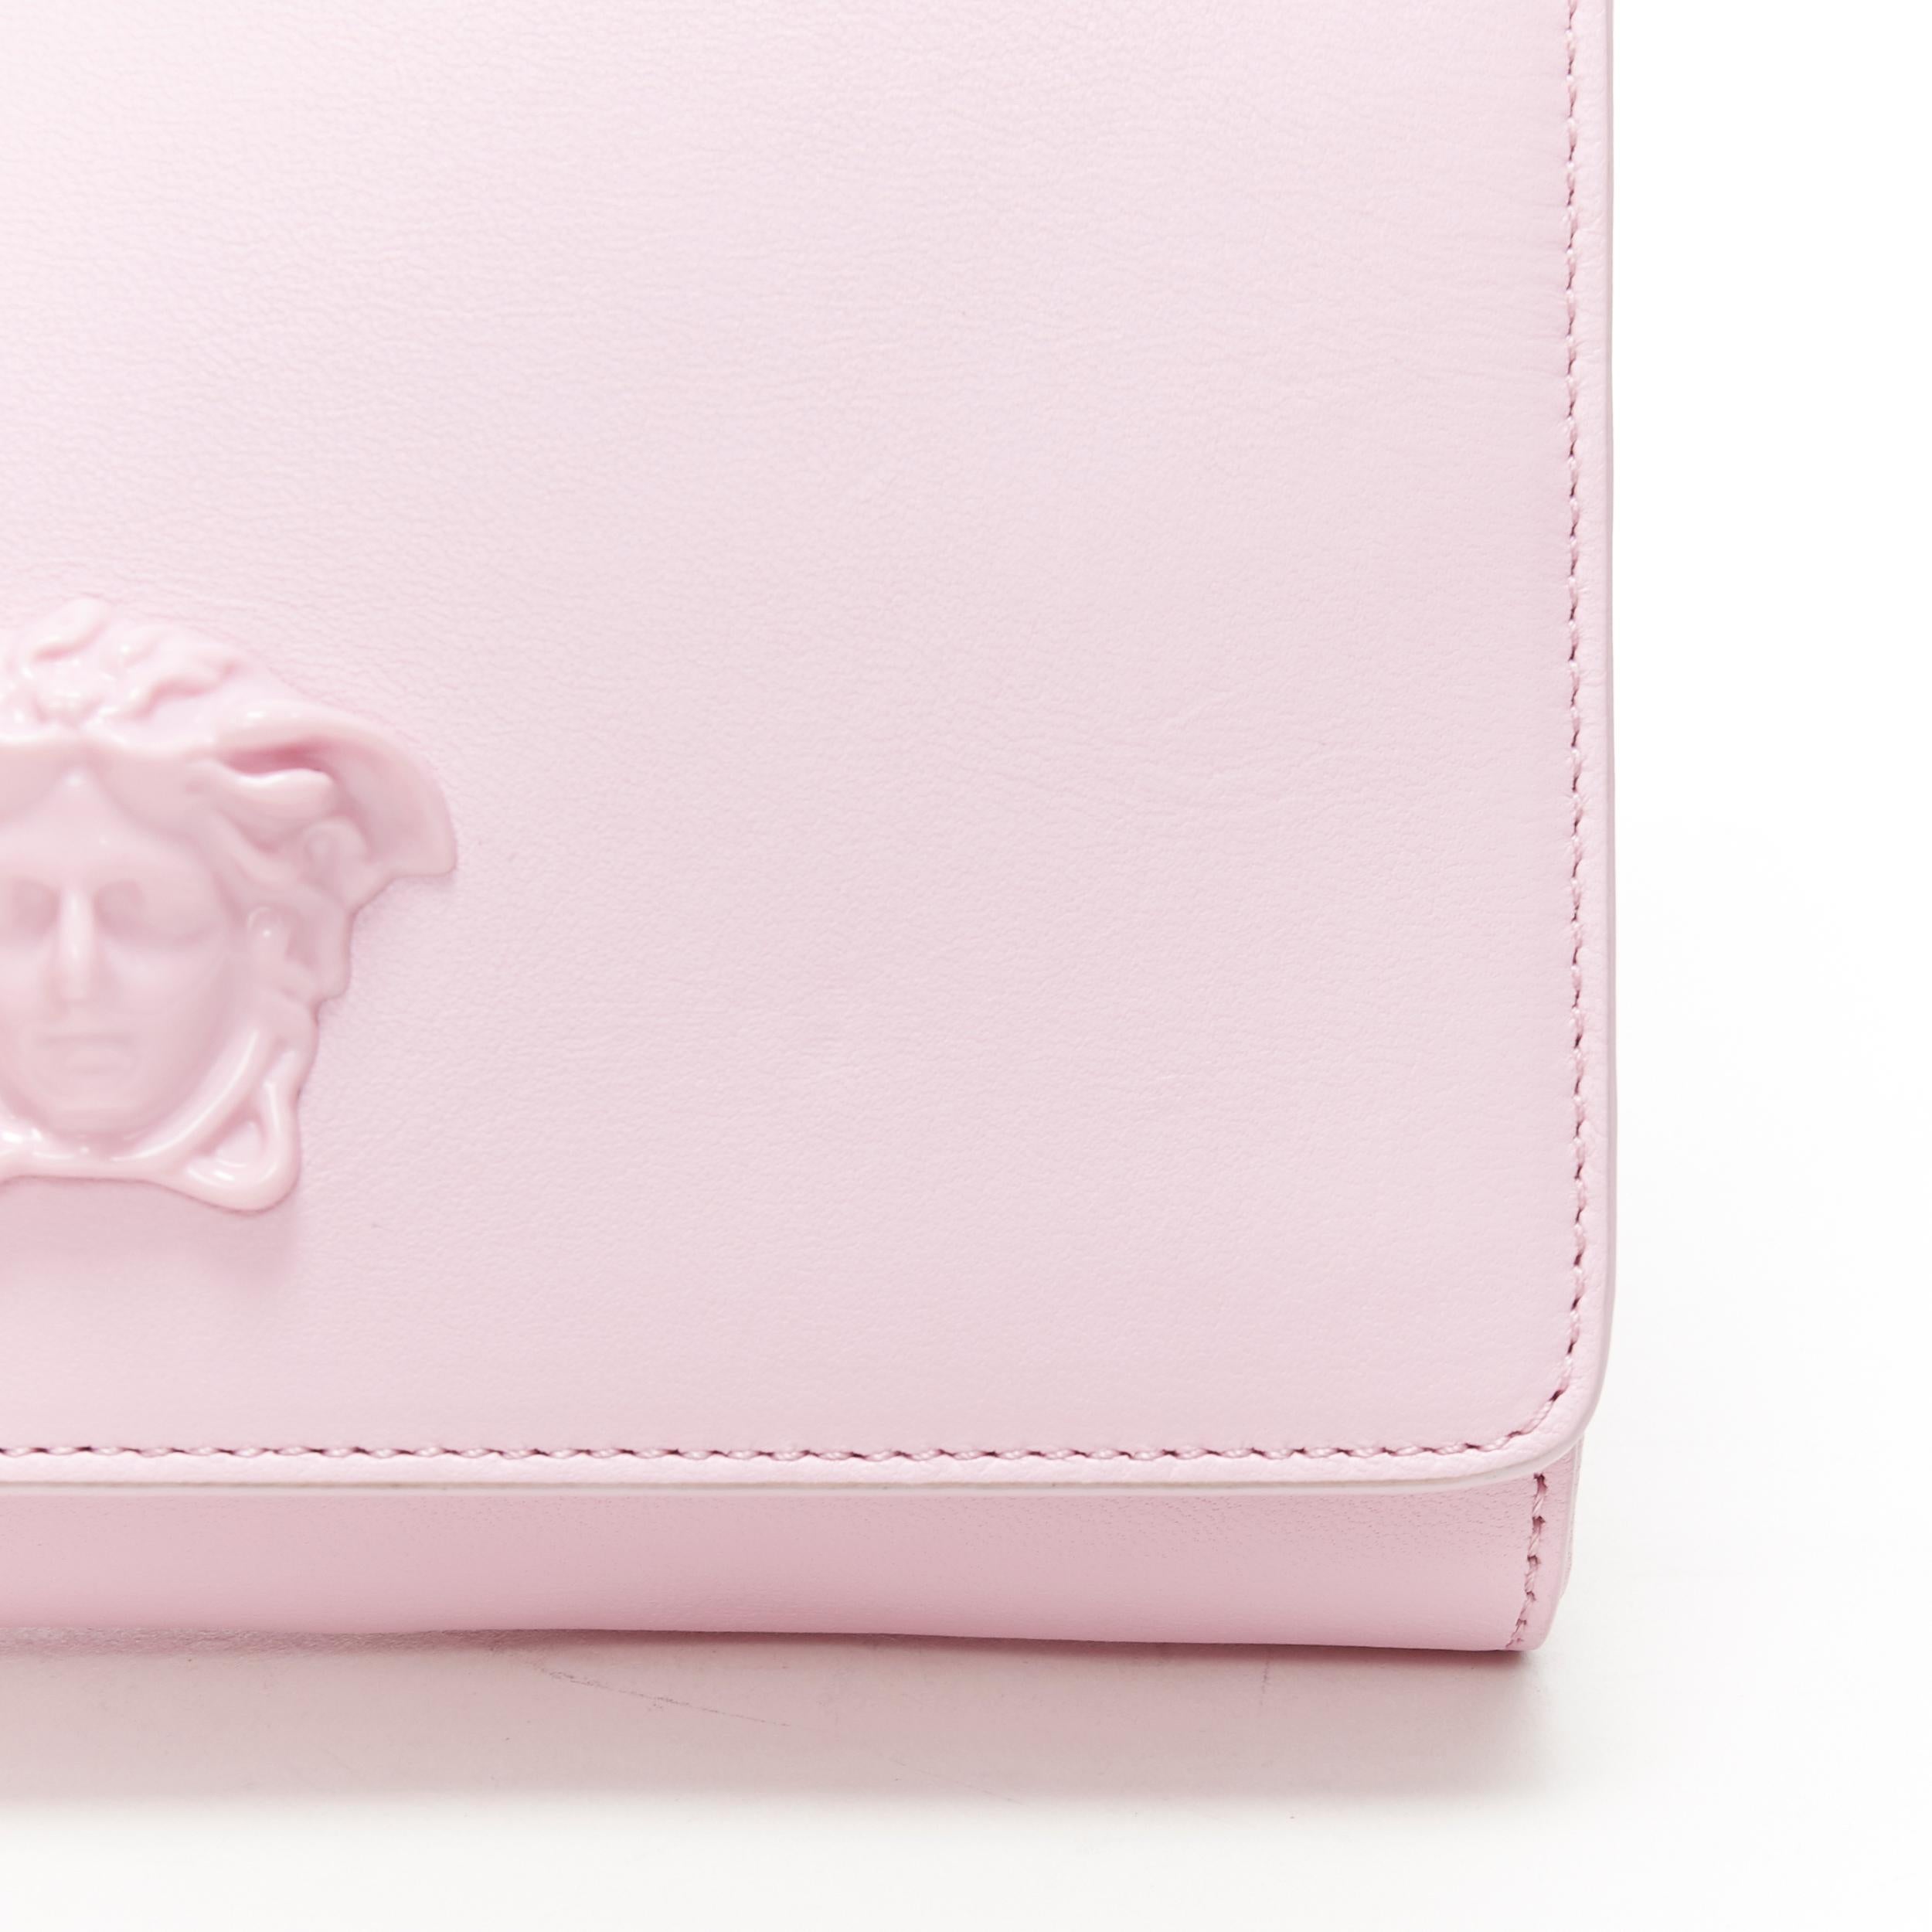 Women's new VERSACE Palazzo Medusa light pink leather flap chain shoulder bag clutch